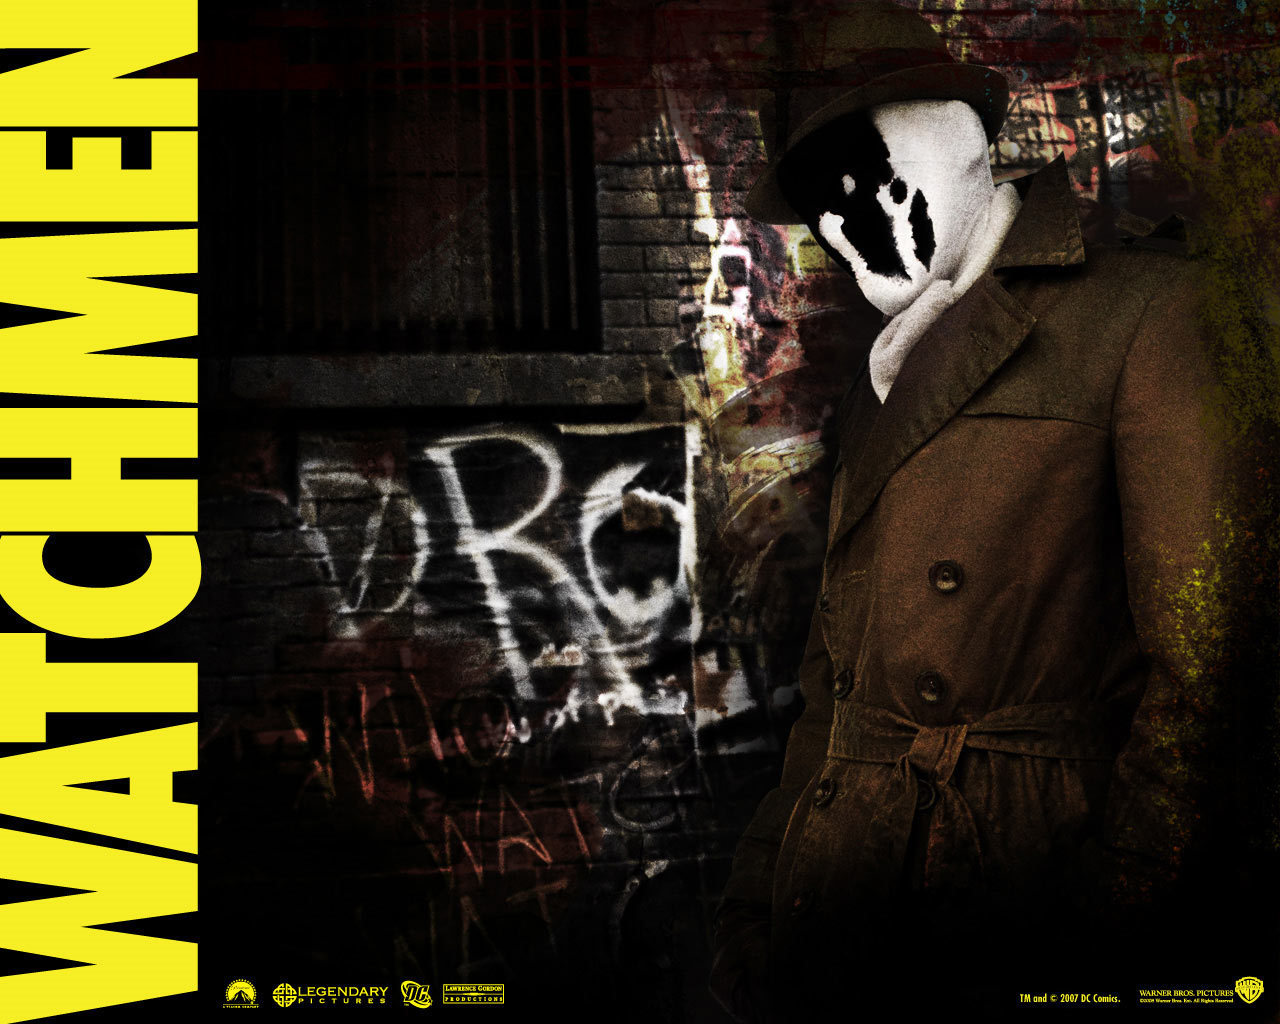 watchmen wallpaper,rorschach,font,graphic design,poster,album cover